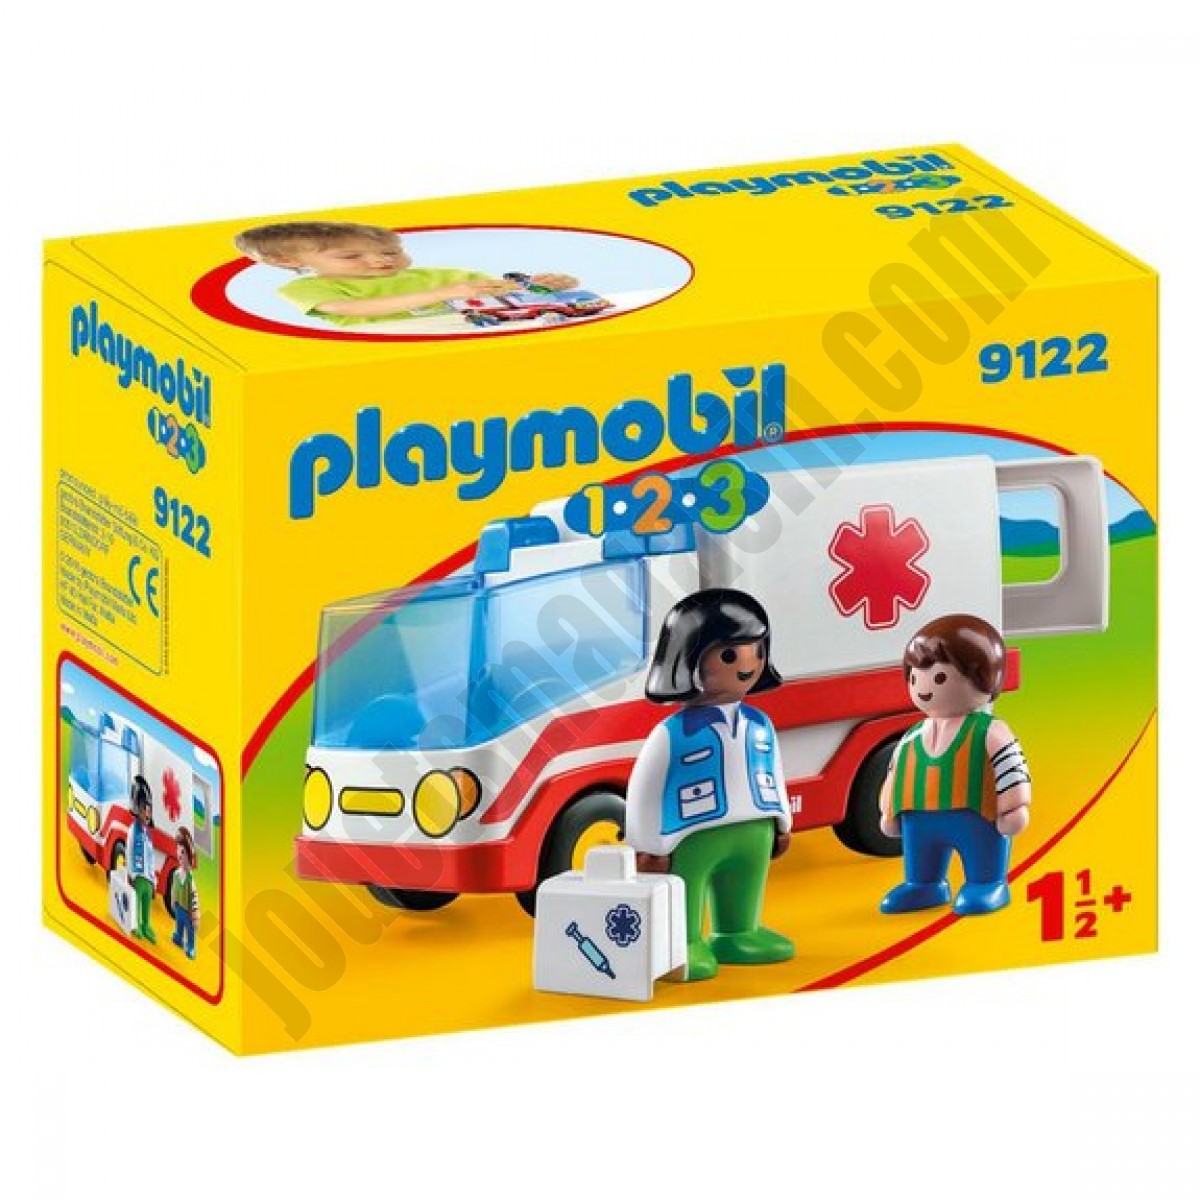 Ambulance Playmobil 1.2.3 En promotion - Ambulance Playmobil 1.2.3 En promotion